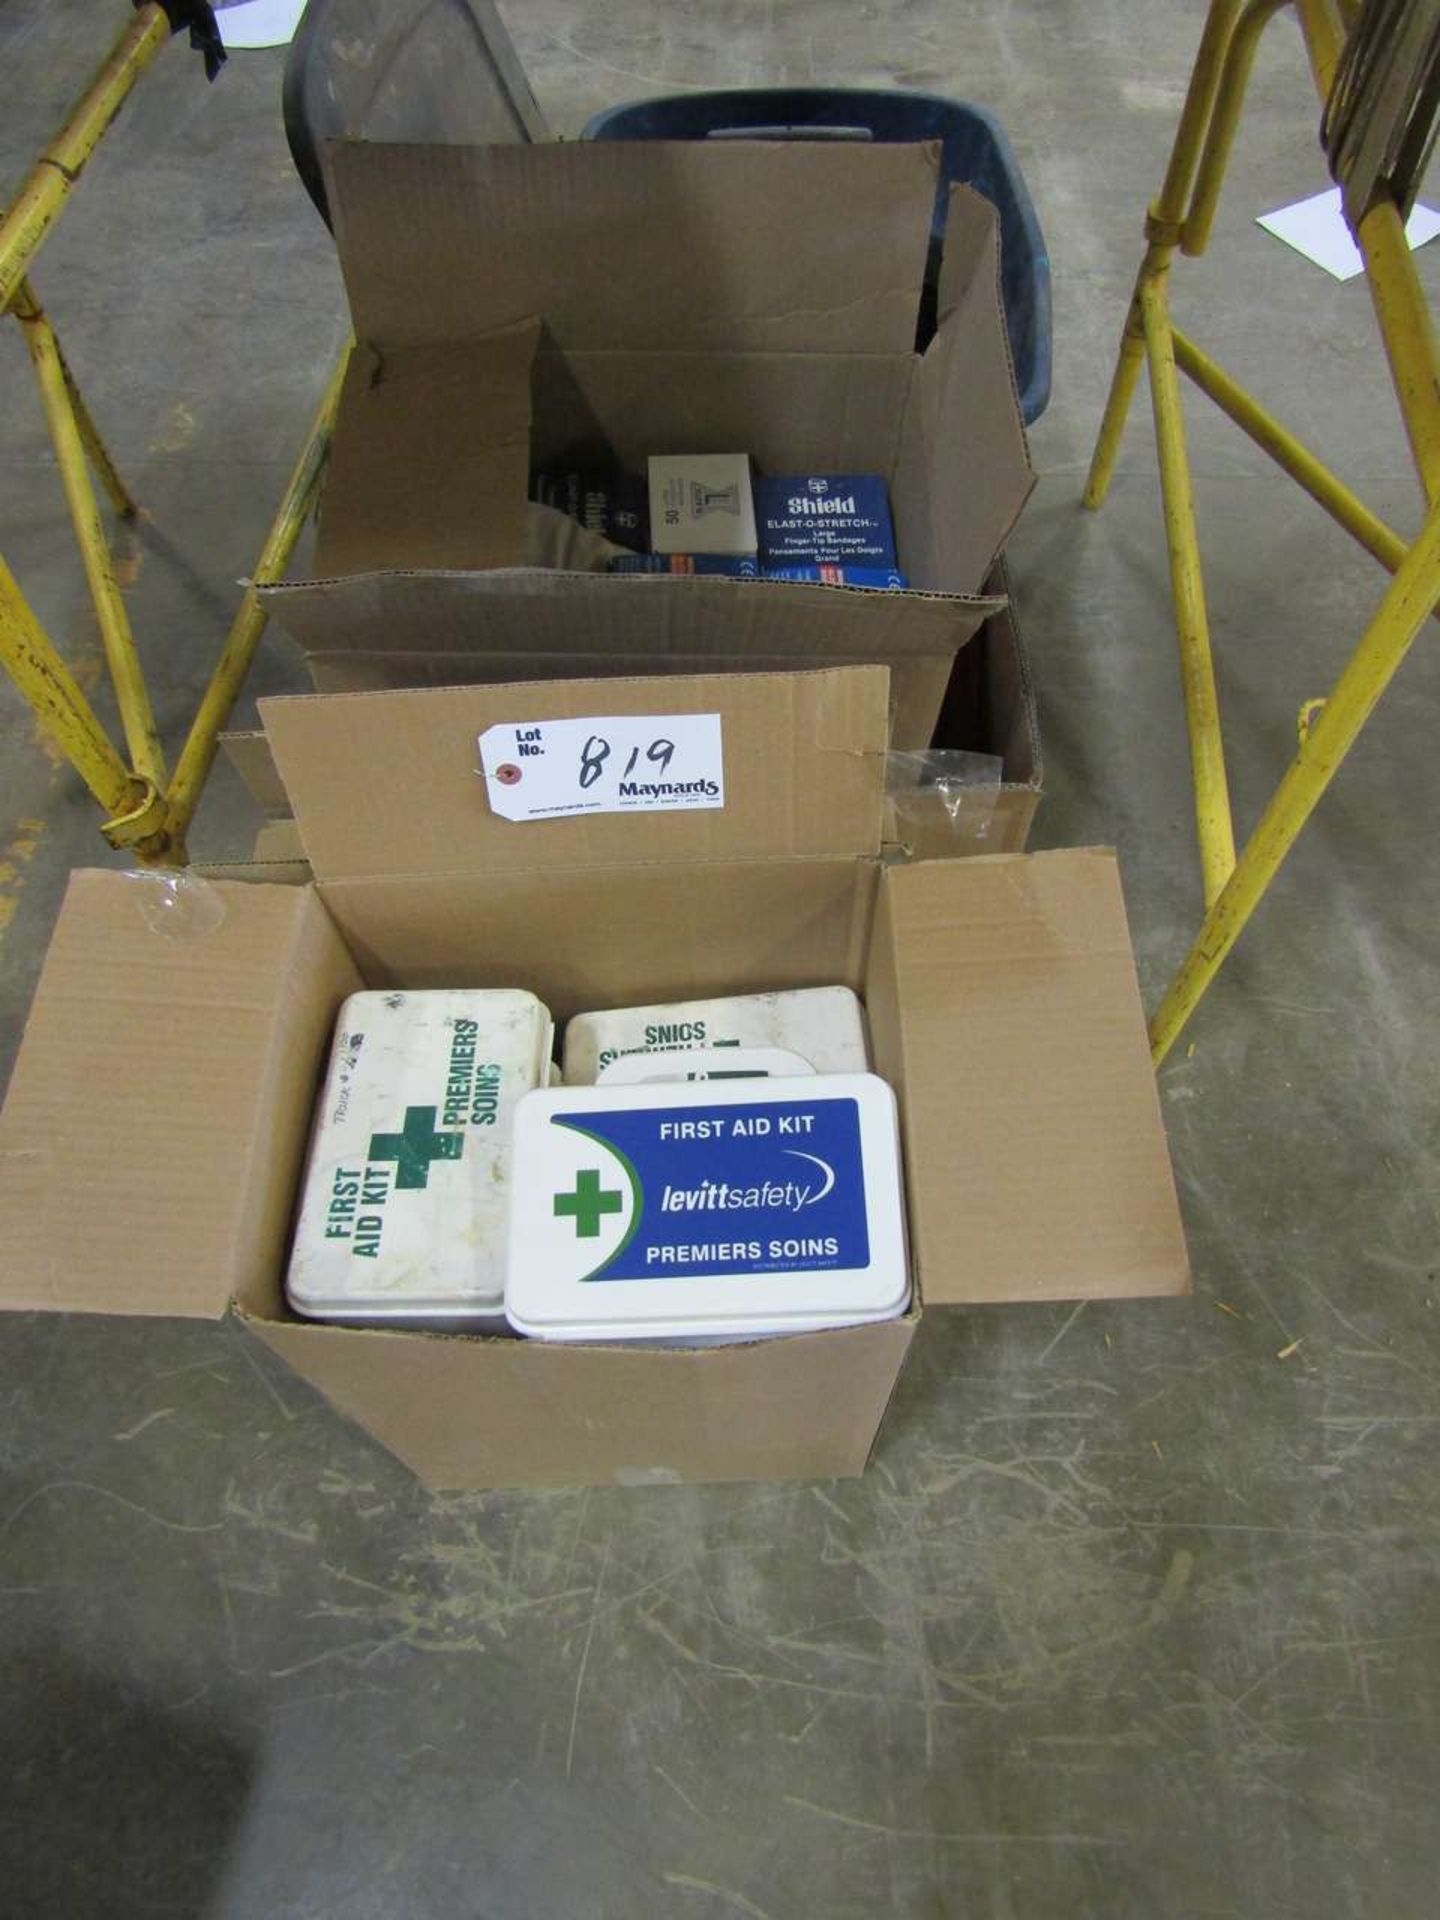 Several First Aid Kits